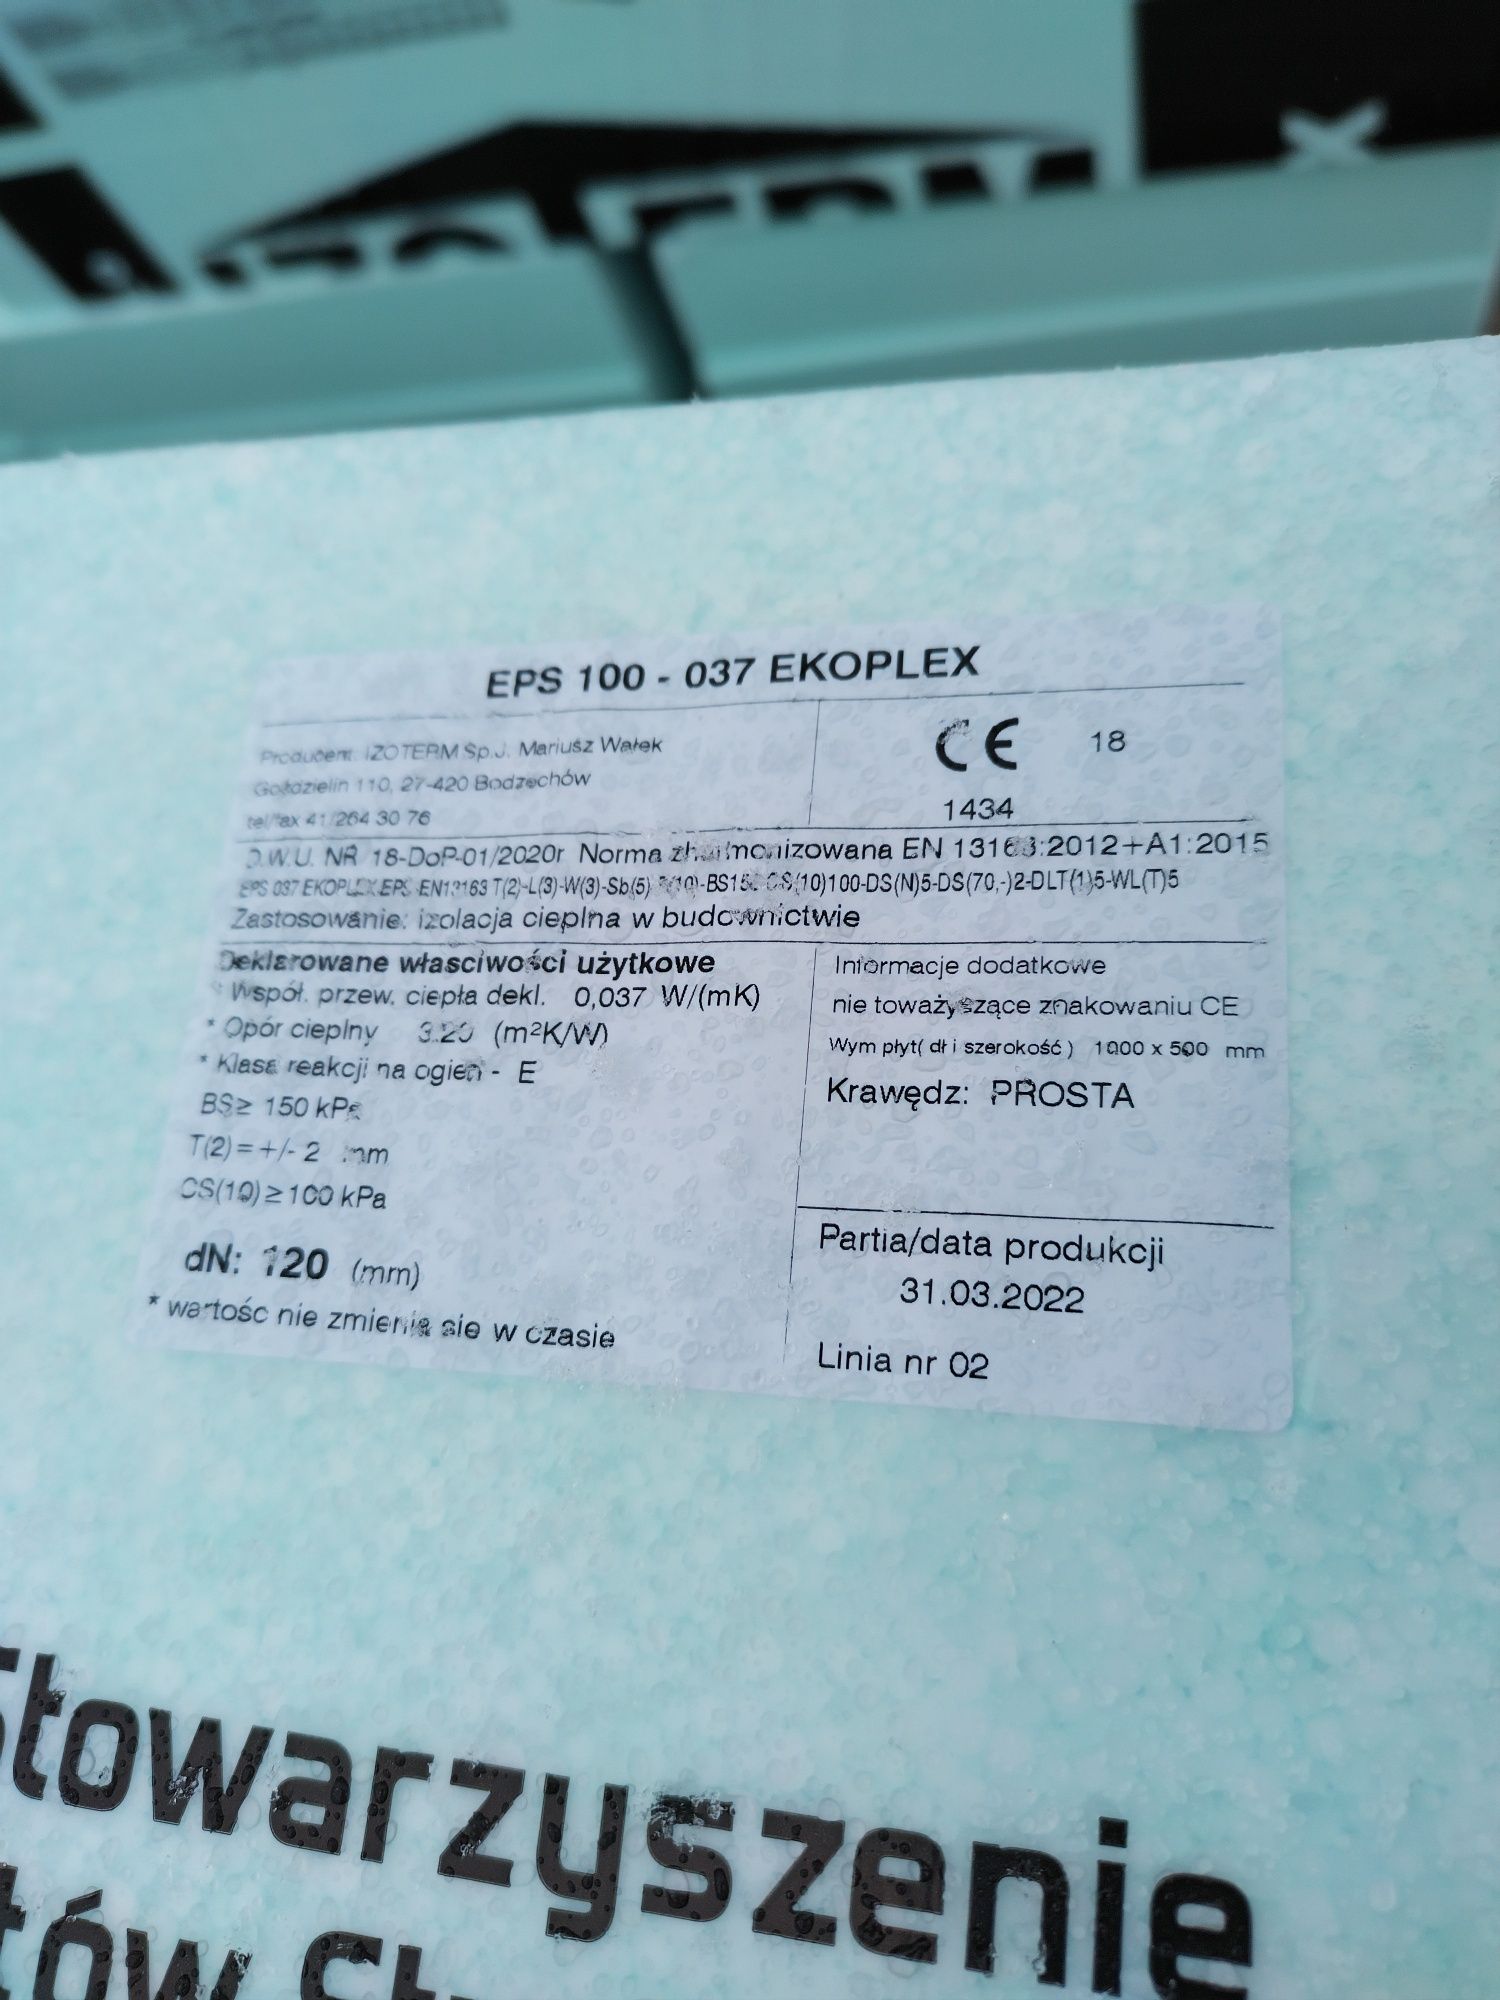 styropian Izoterm ekoplex 100-037 hydro 360 zł/m3  12 cm